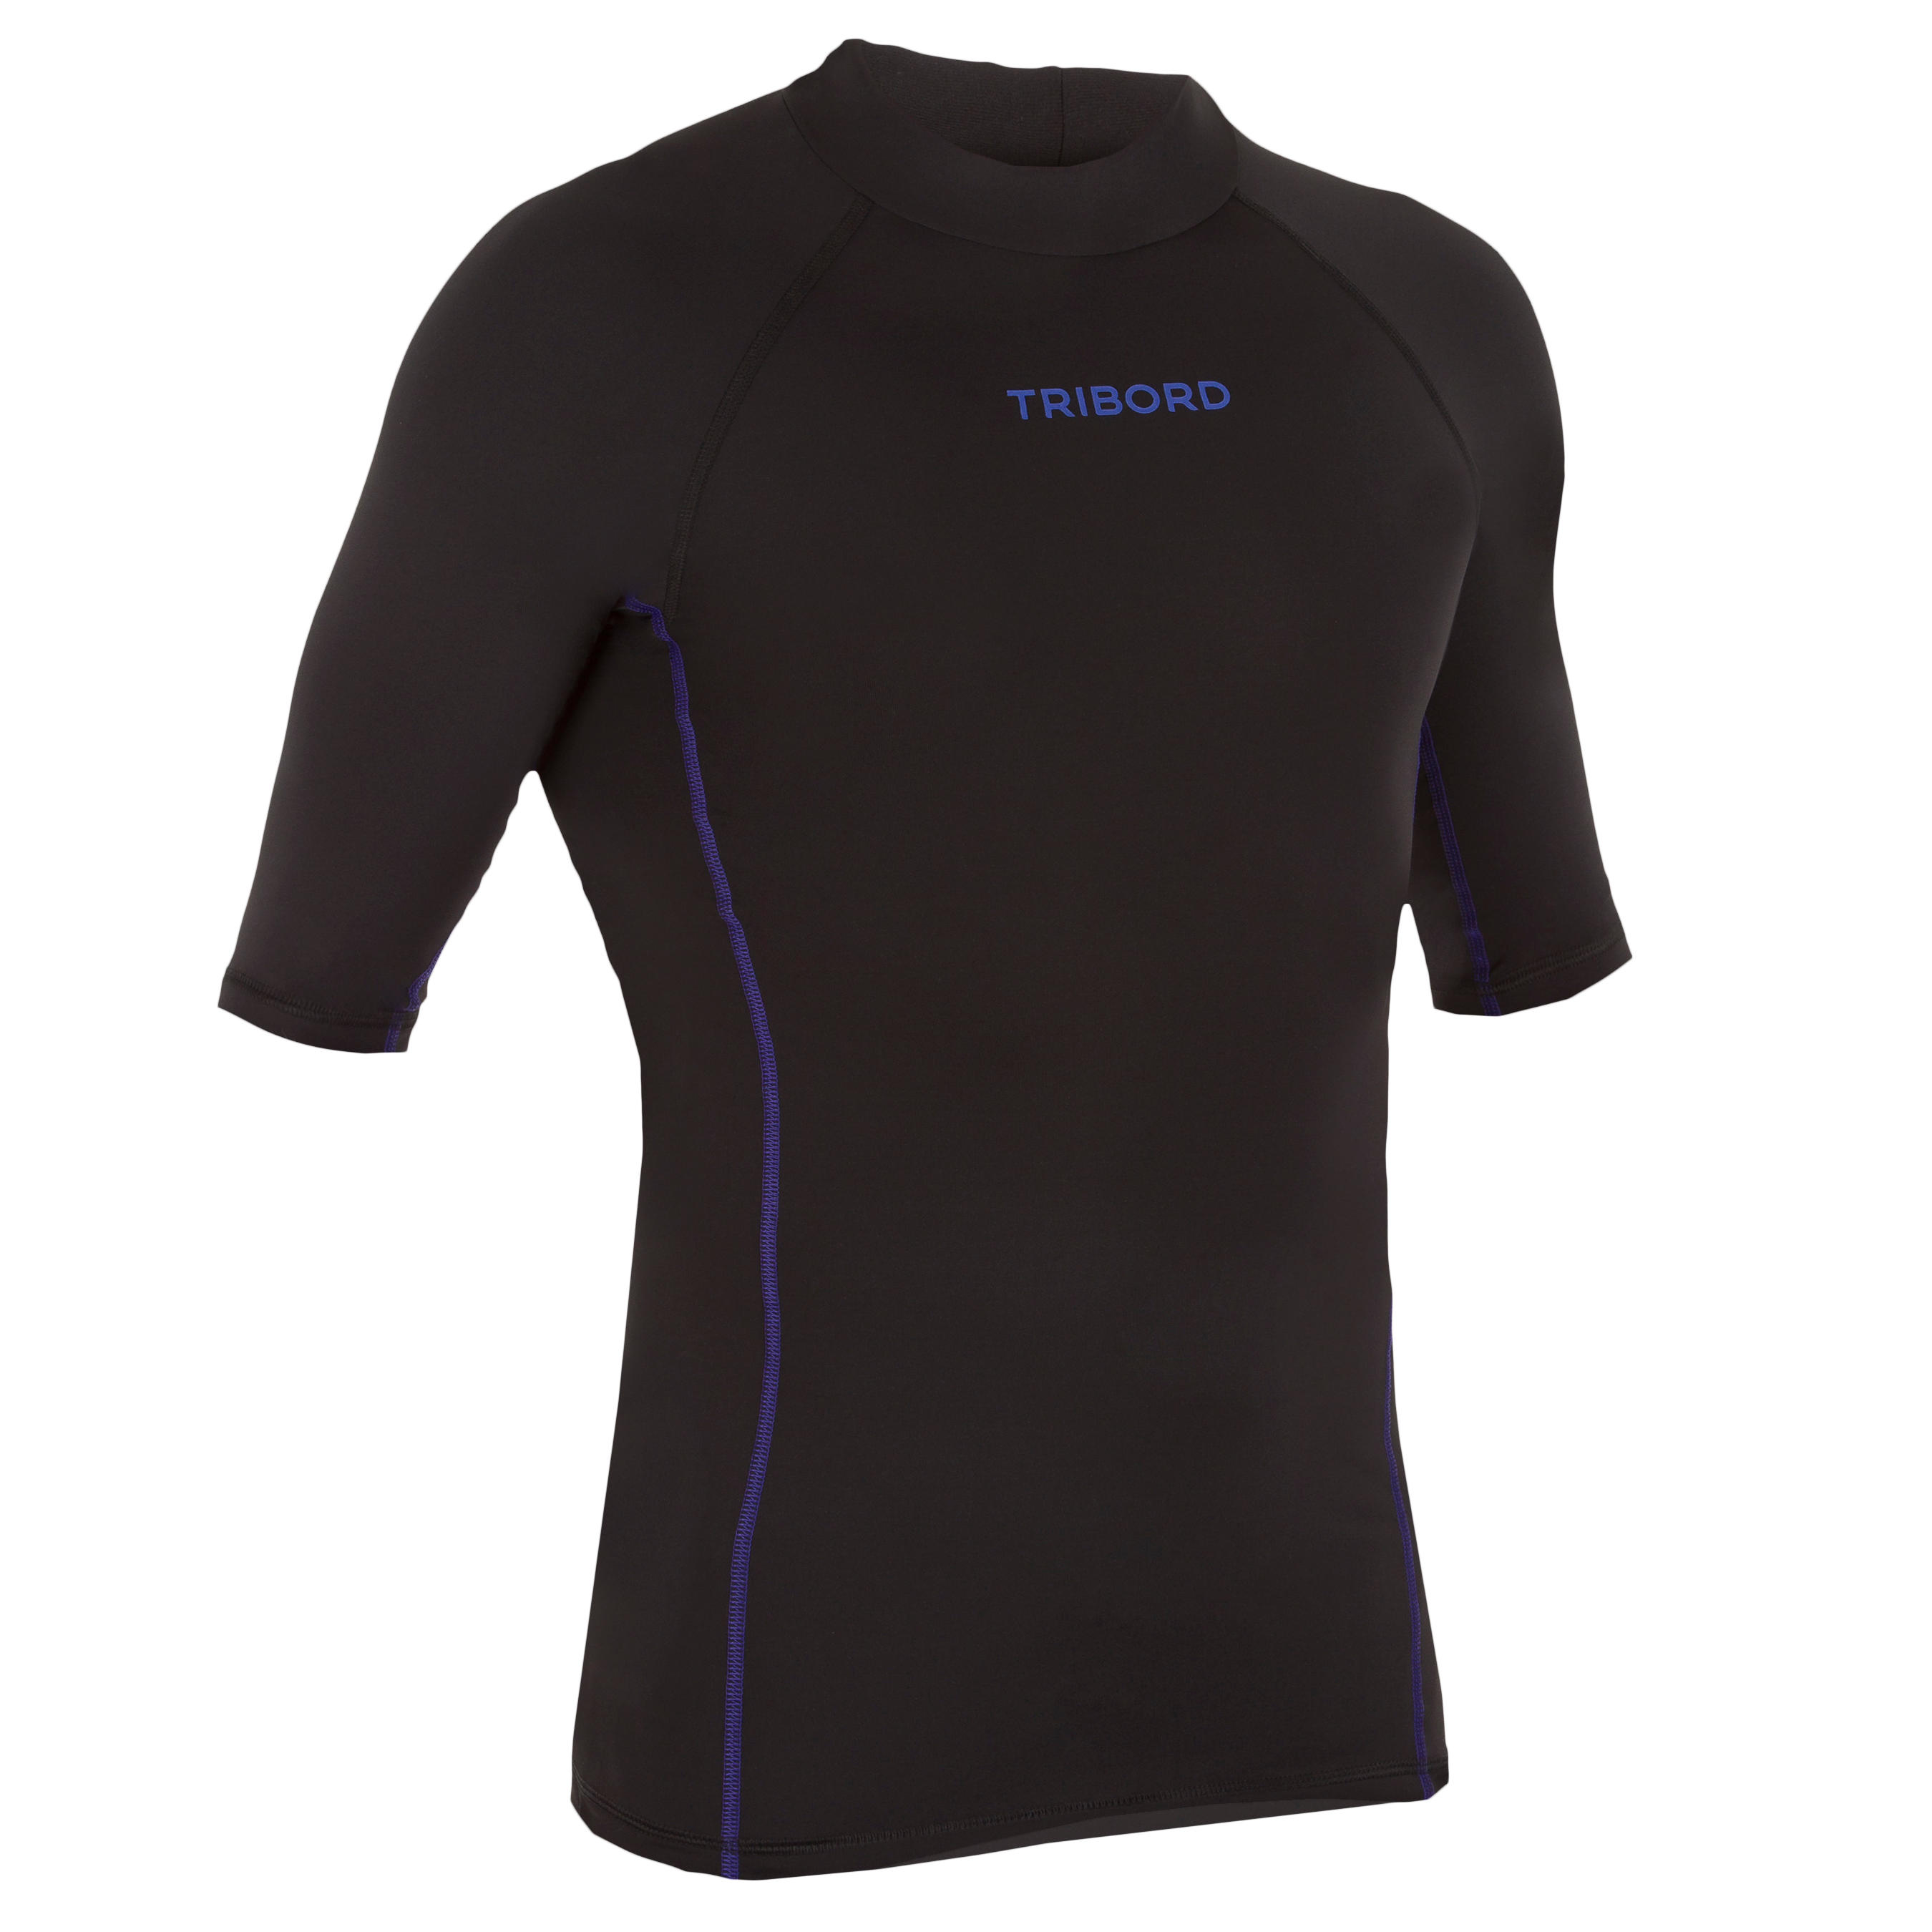 TRIBORD 500 Men's Short Sleeve UV Protection Surfing Top T-Shirt - Black